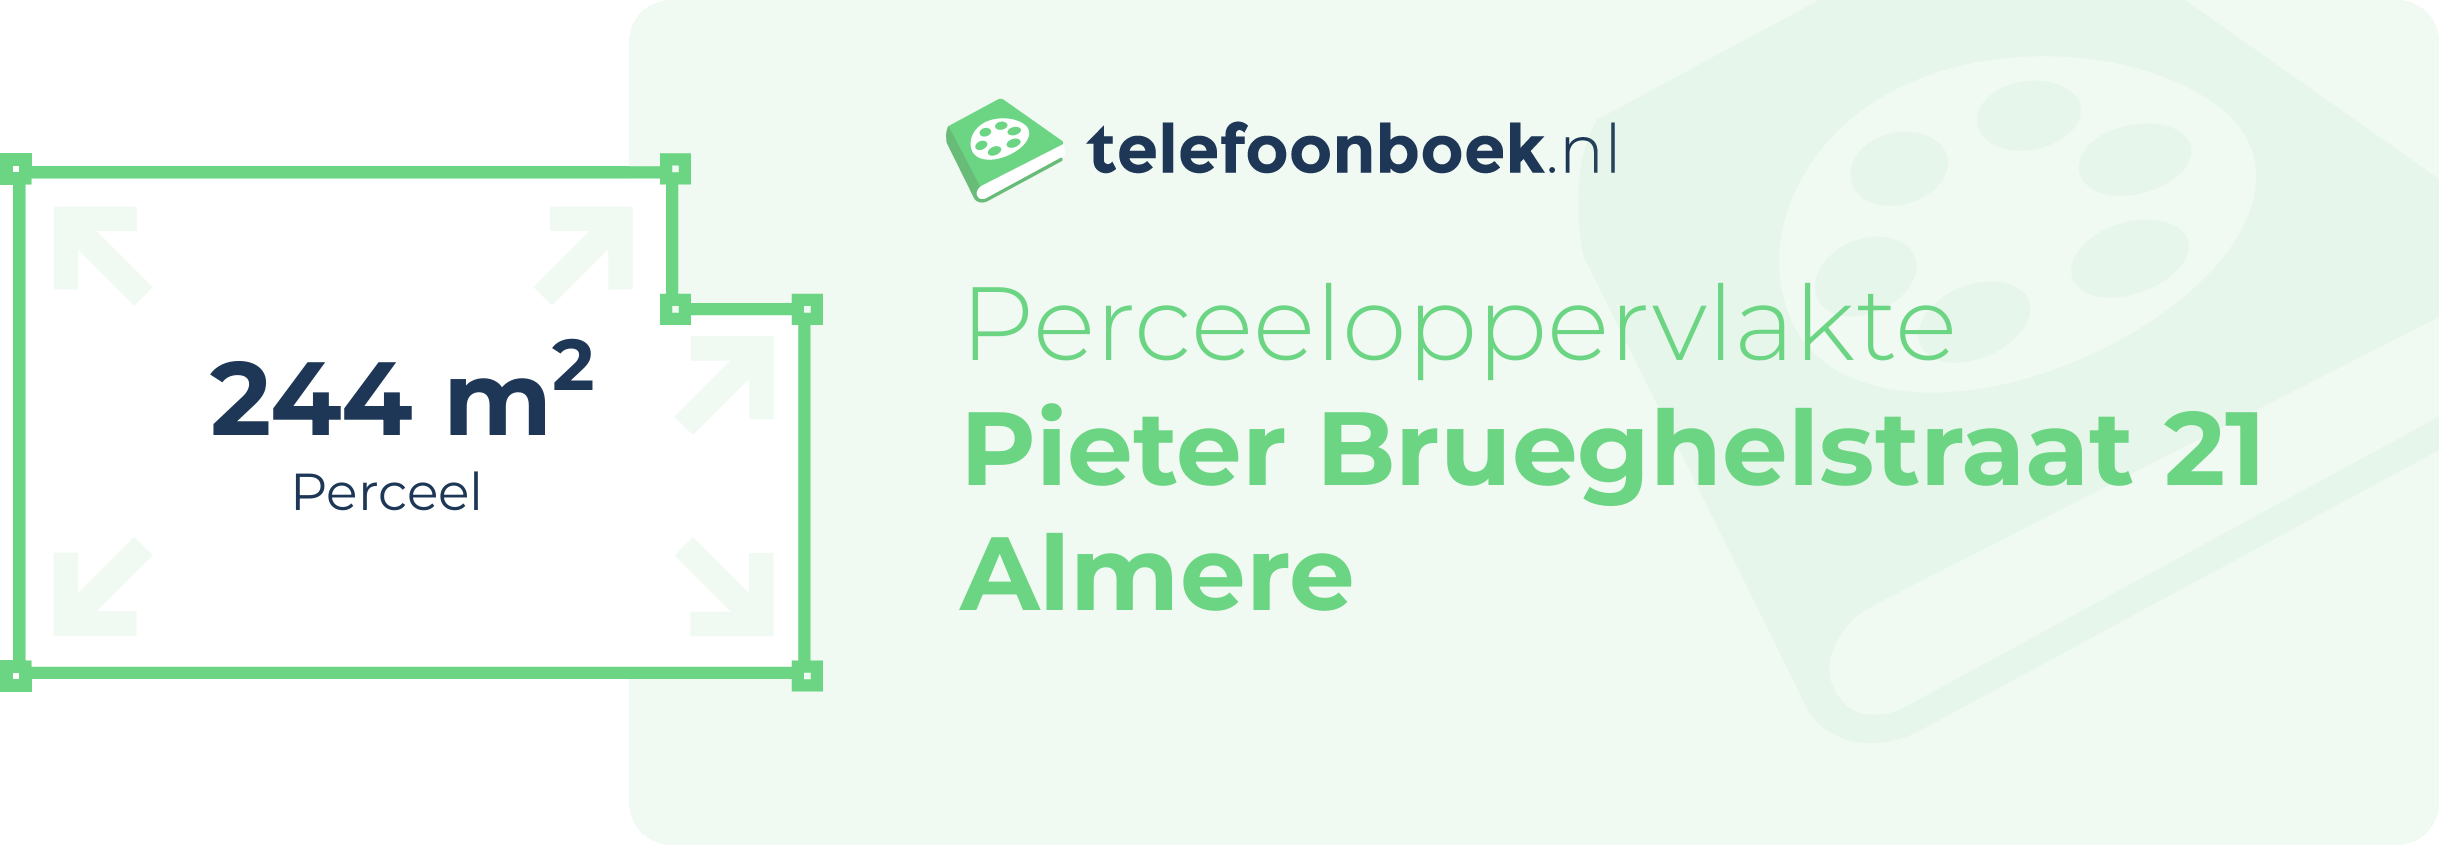 Perceeloppervlakte Pieter Brueghelstraat 21 Almere